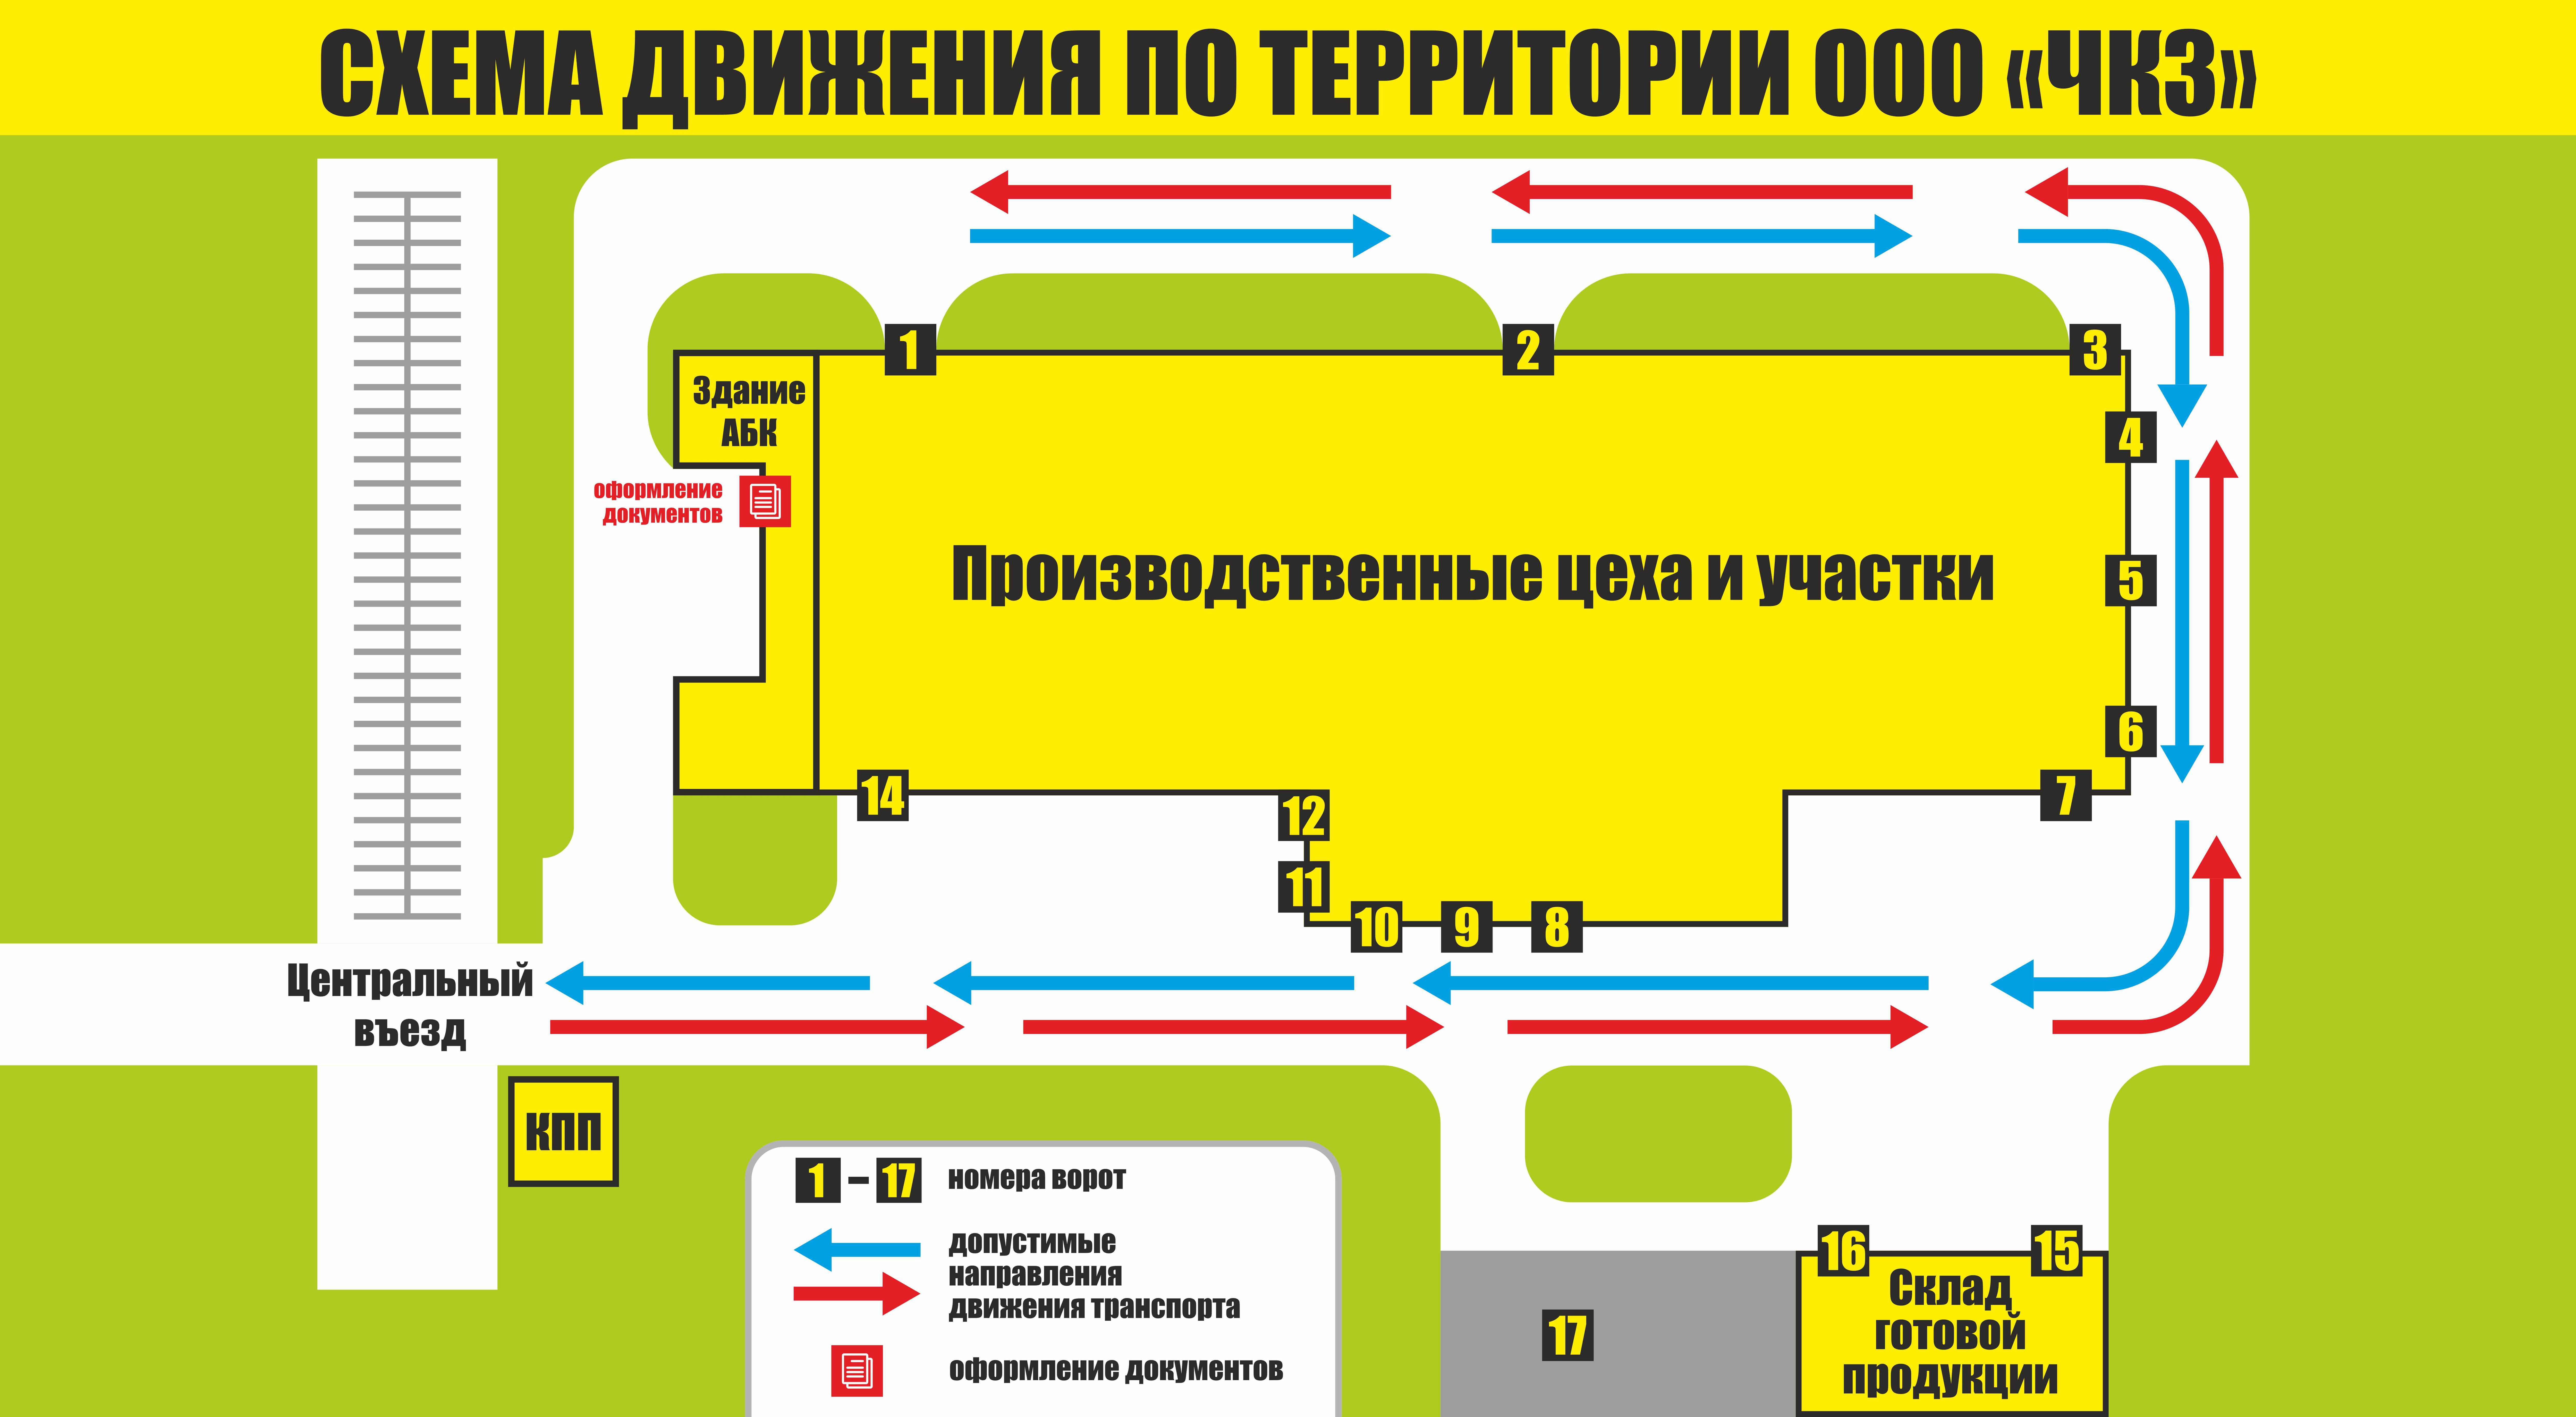 Схема передвижения по территории